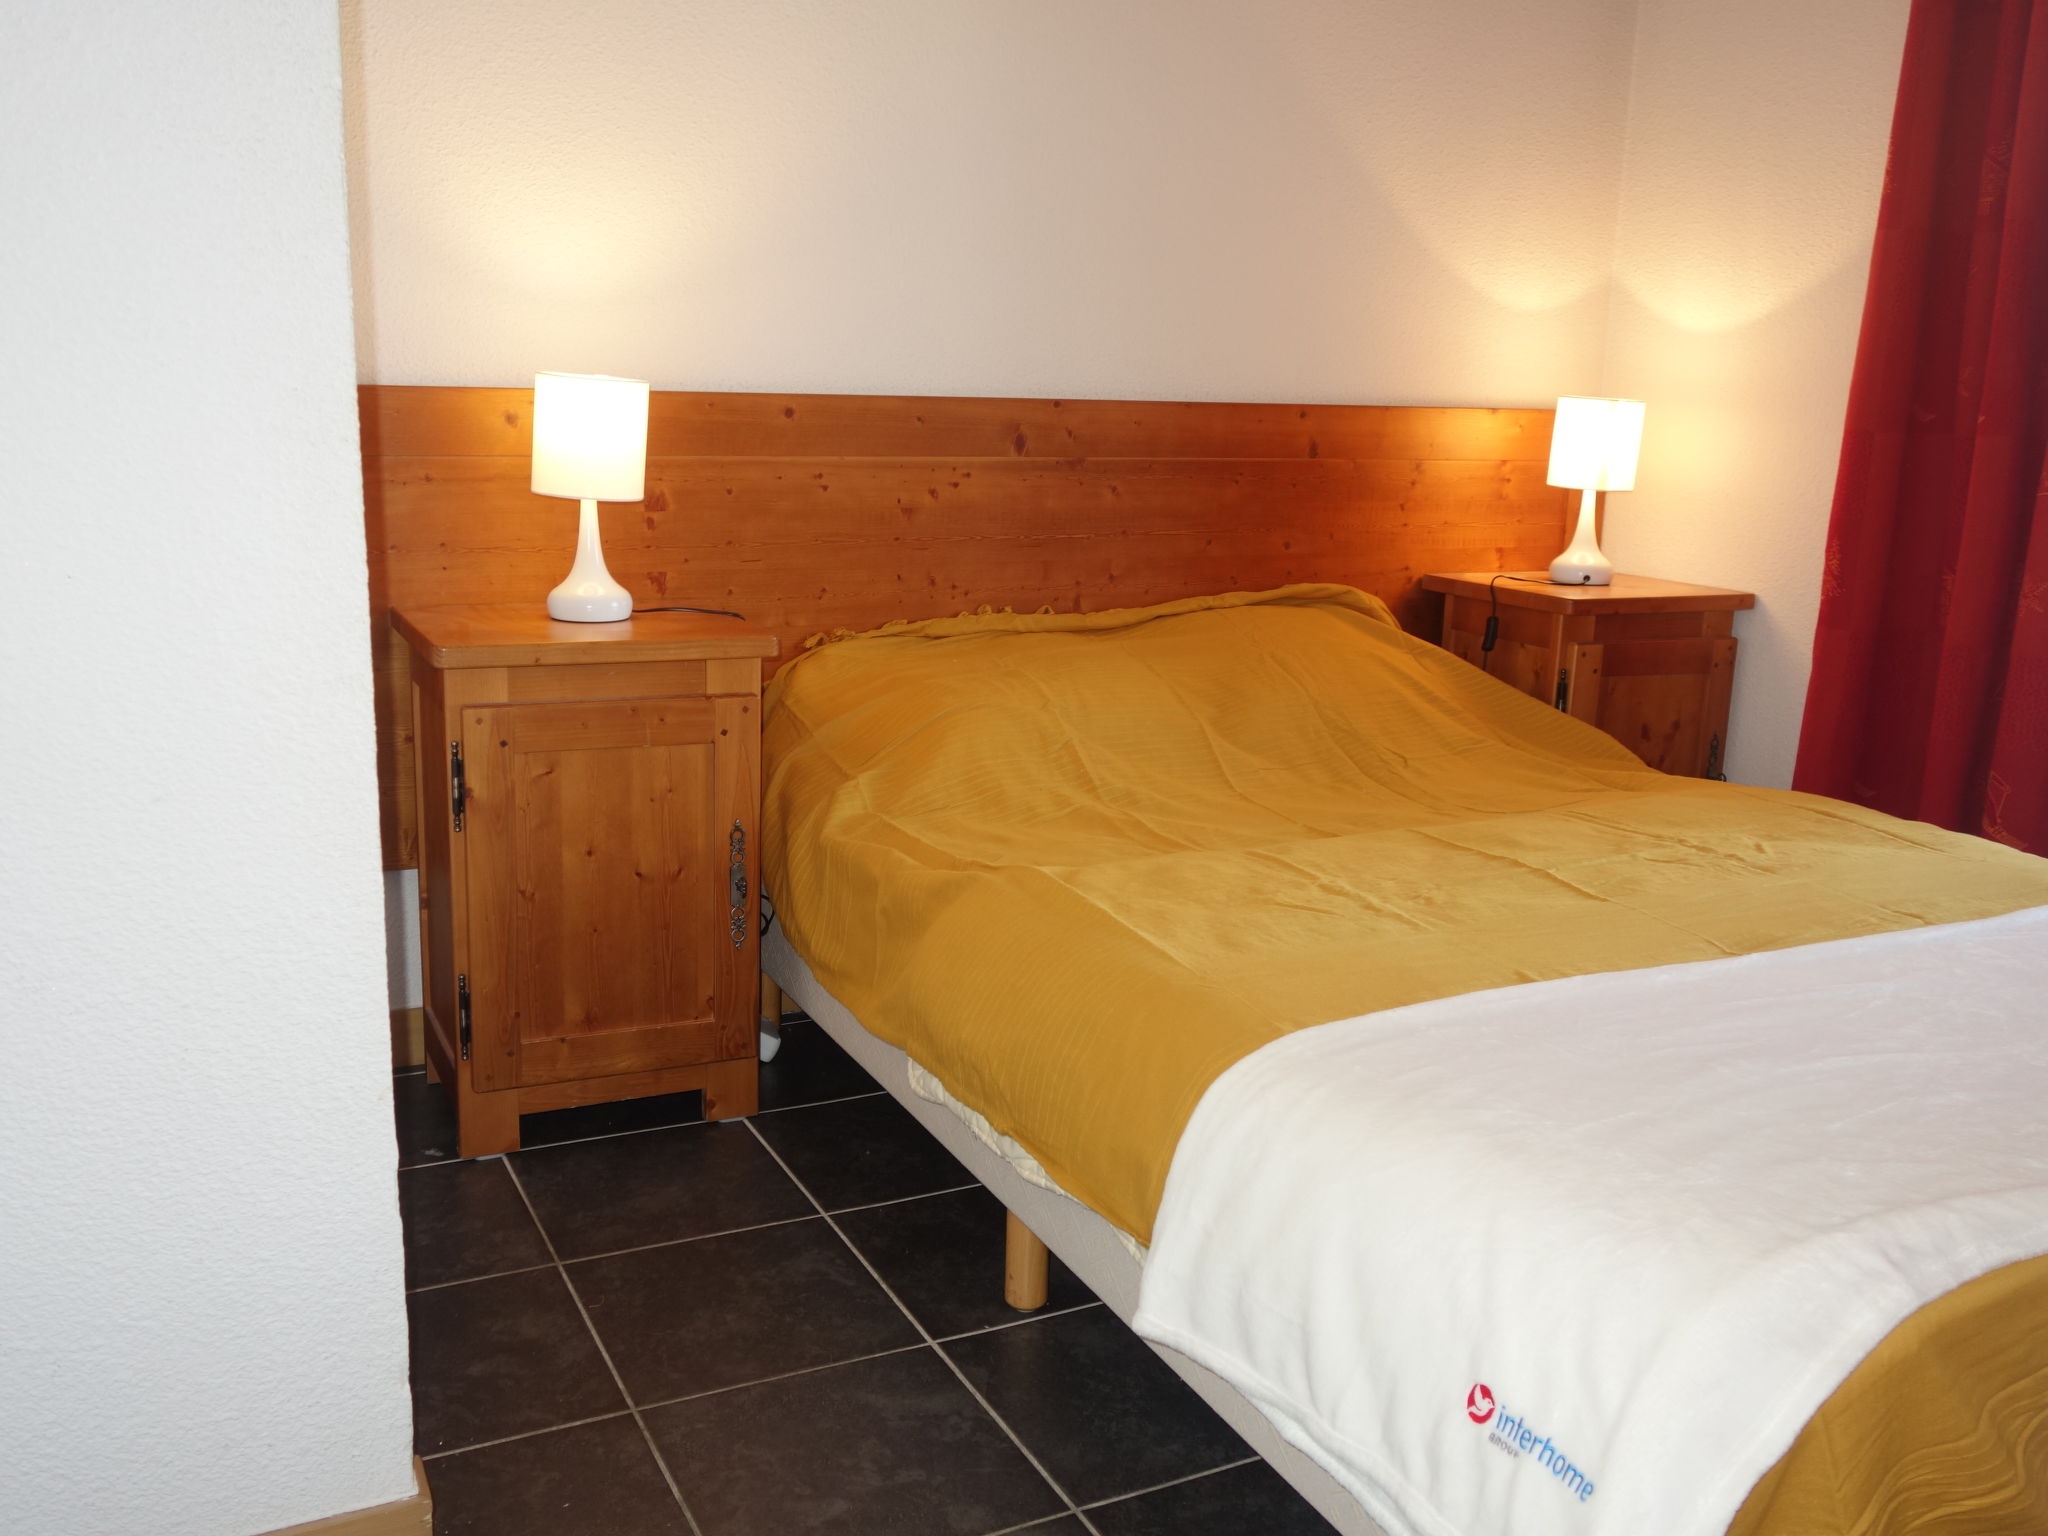 Foto 12 - Appartamento con 1 camera da letto a Saint-Gervais-les-Bains con piscina e vista sulle montagne